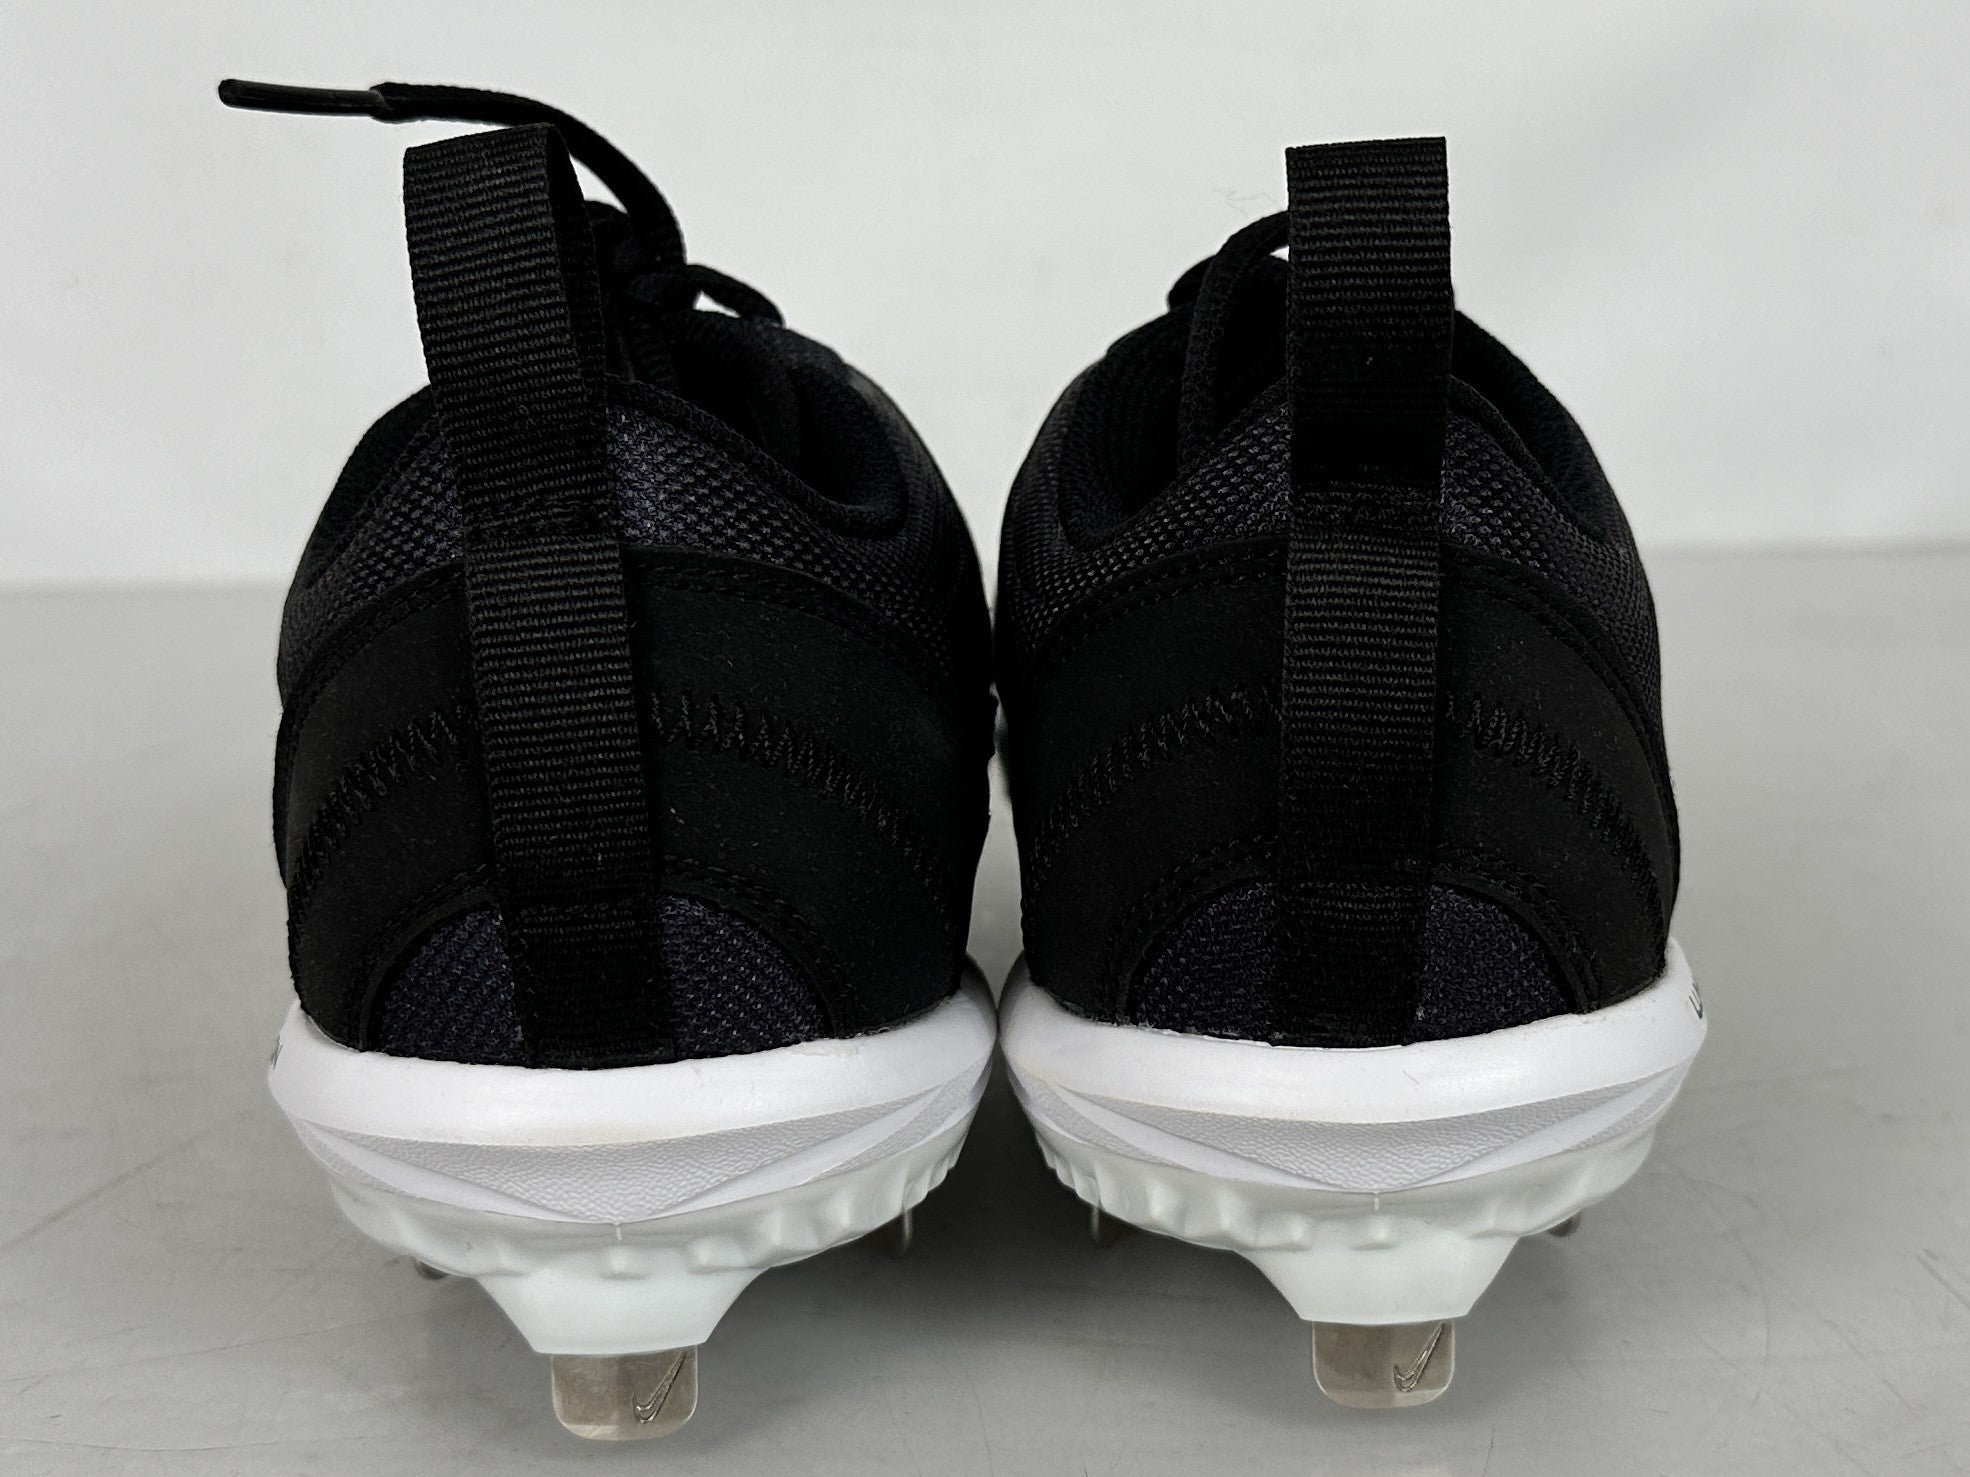 Nike Black & White Lunar Hyperdiamond 2 Pro Softball Cleats Women's Size 7.5